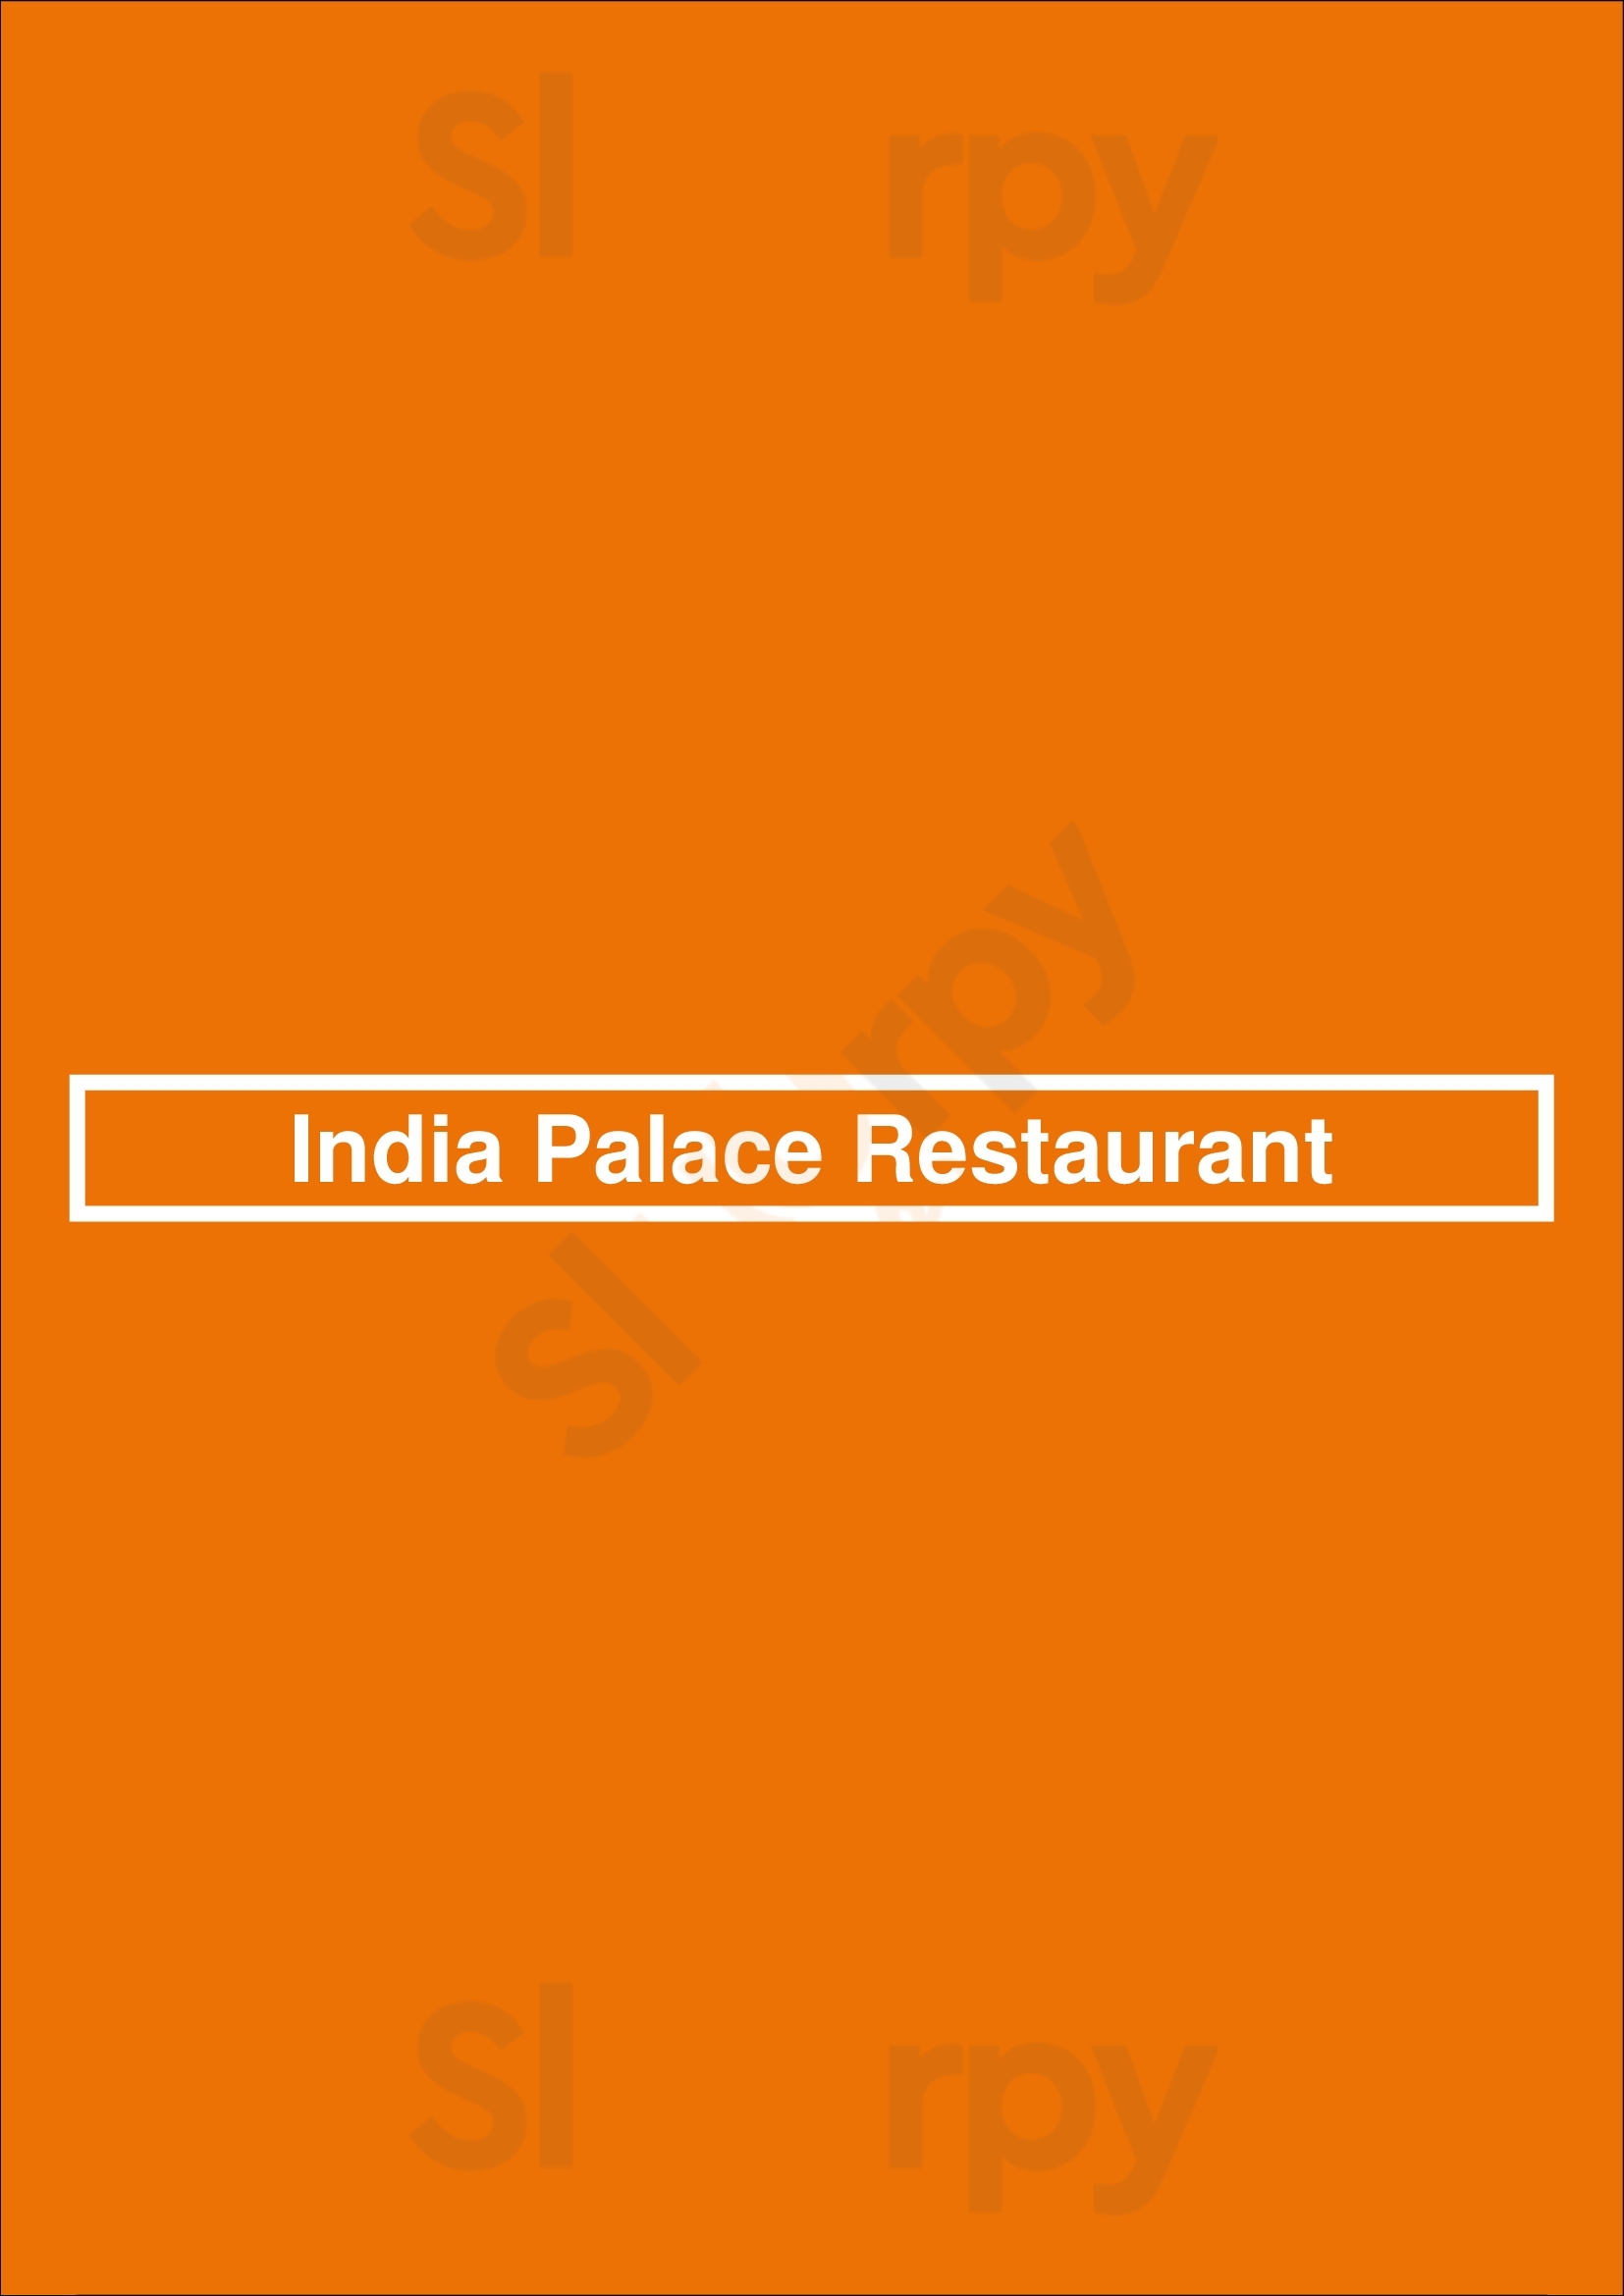 India Palace Restaurant Winnipeg Menu - 1